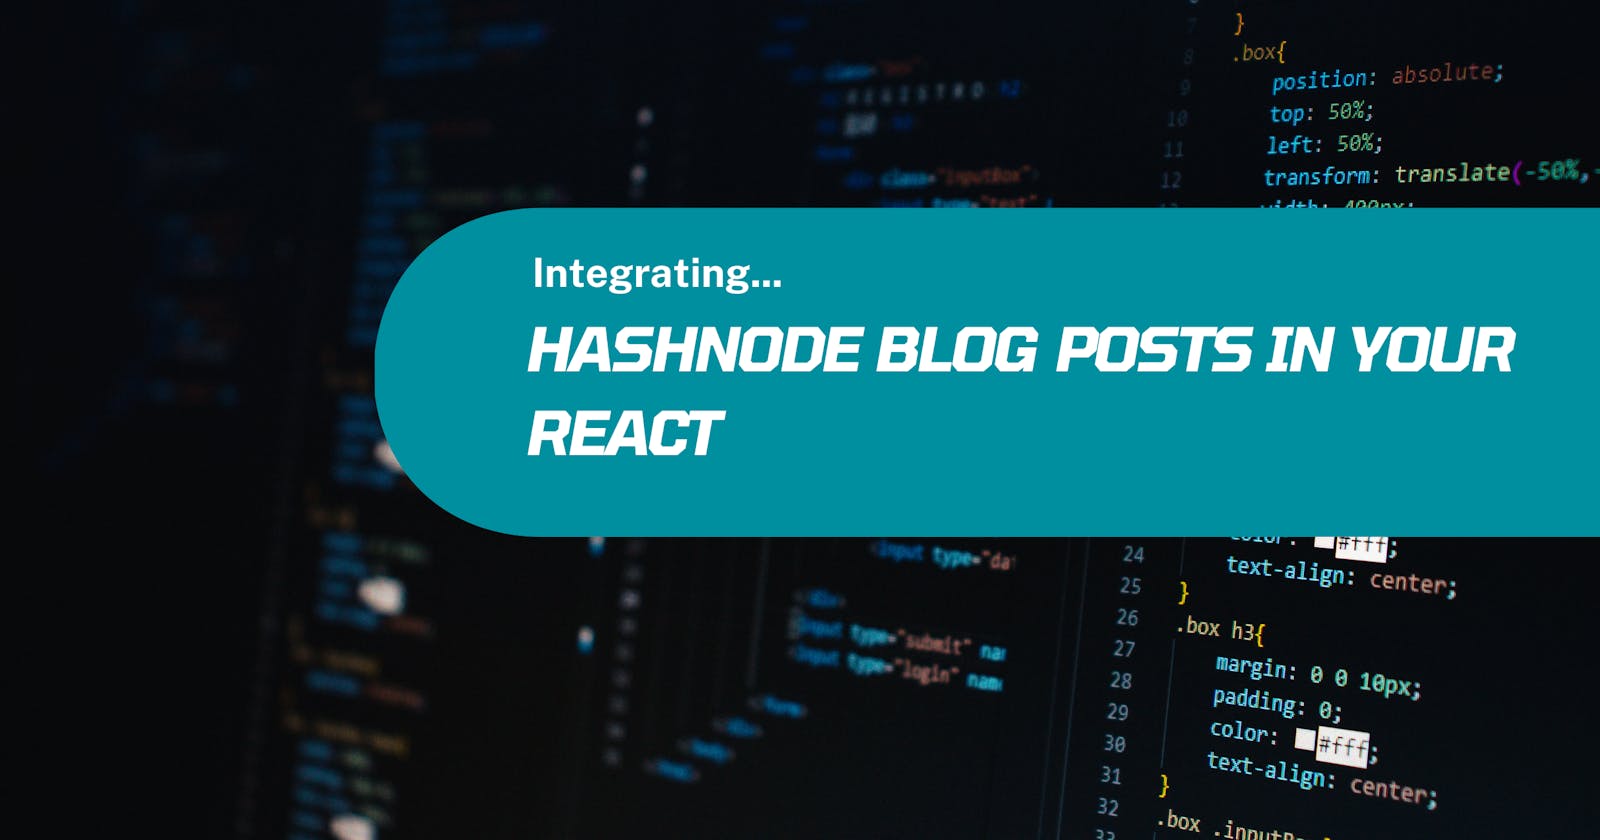 Integrating Hashnode Blog Posts in Your React Application